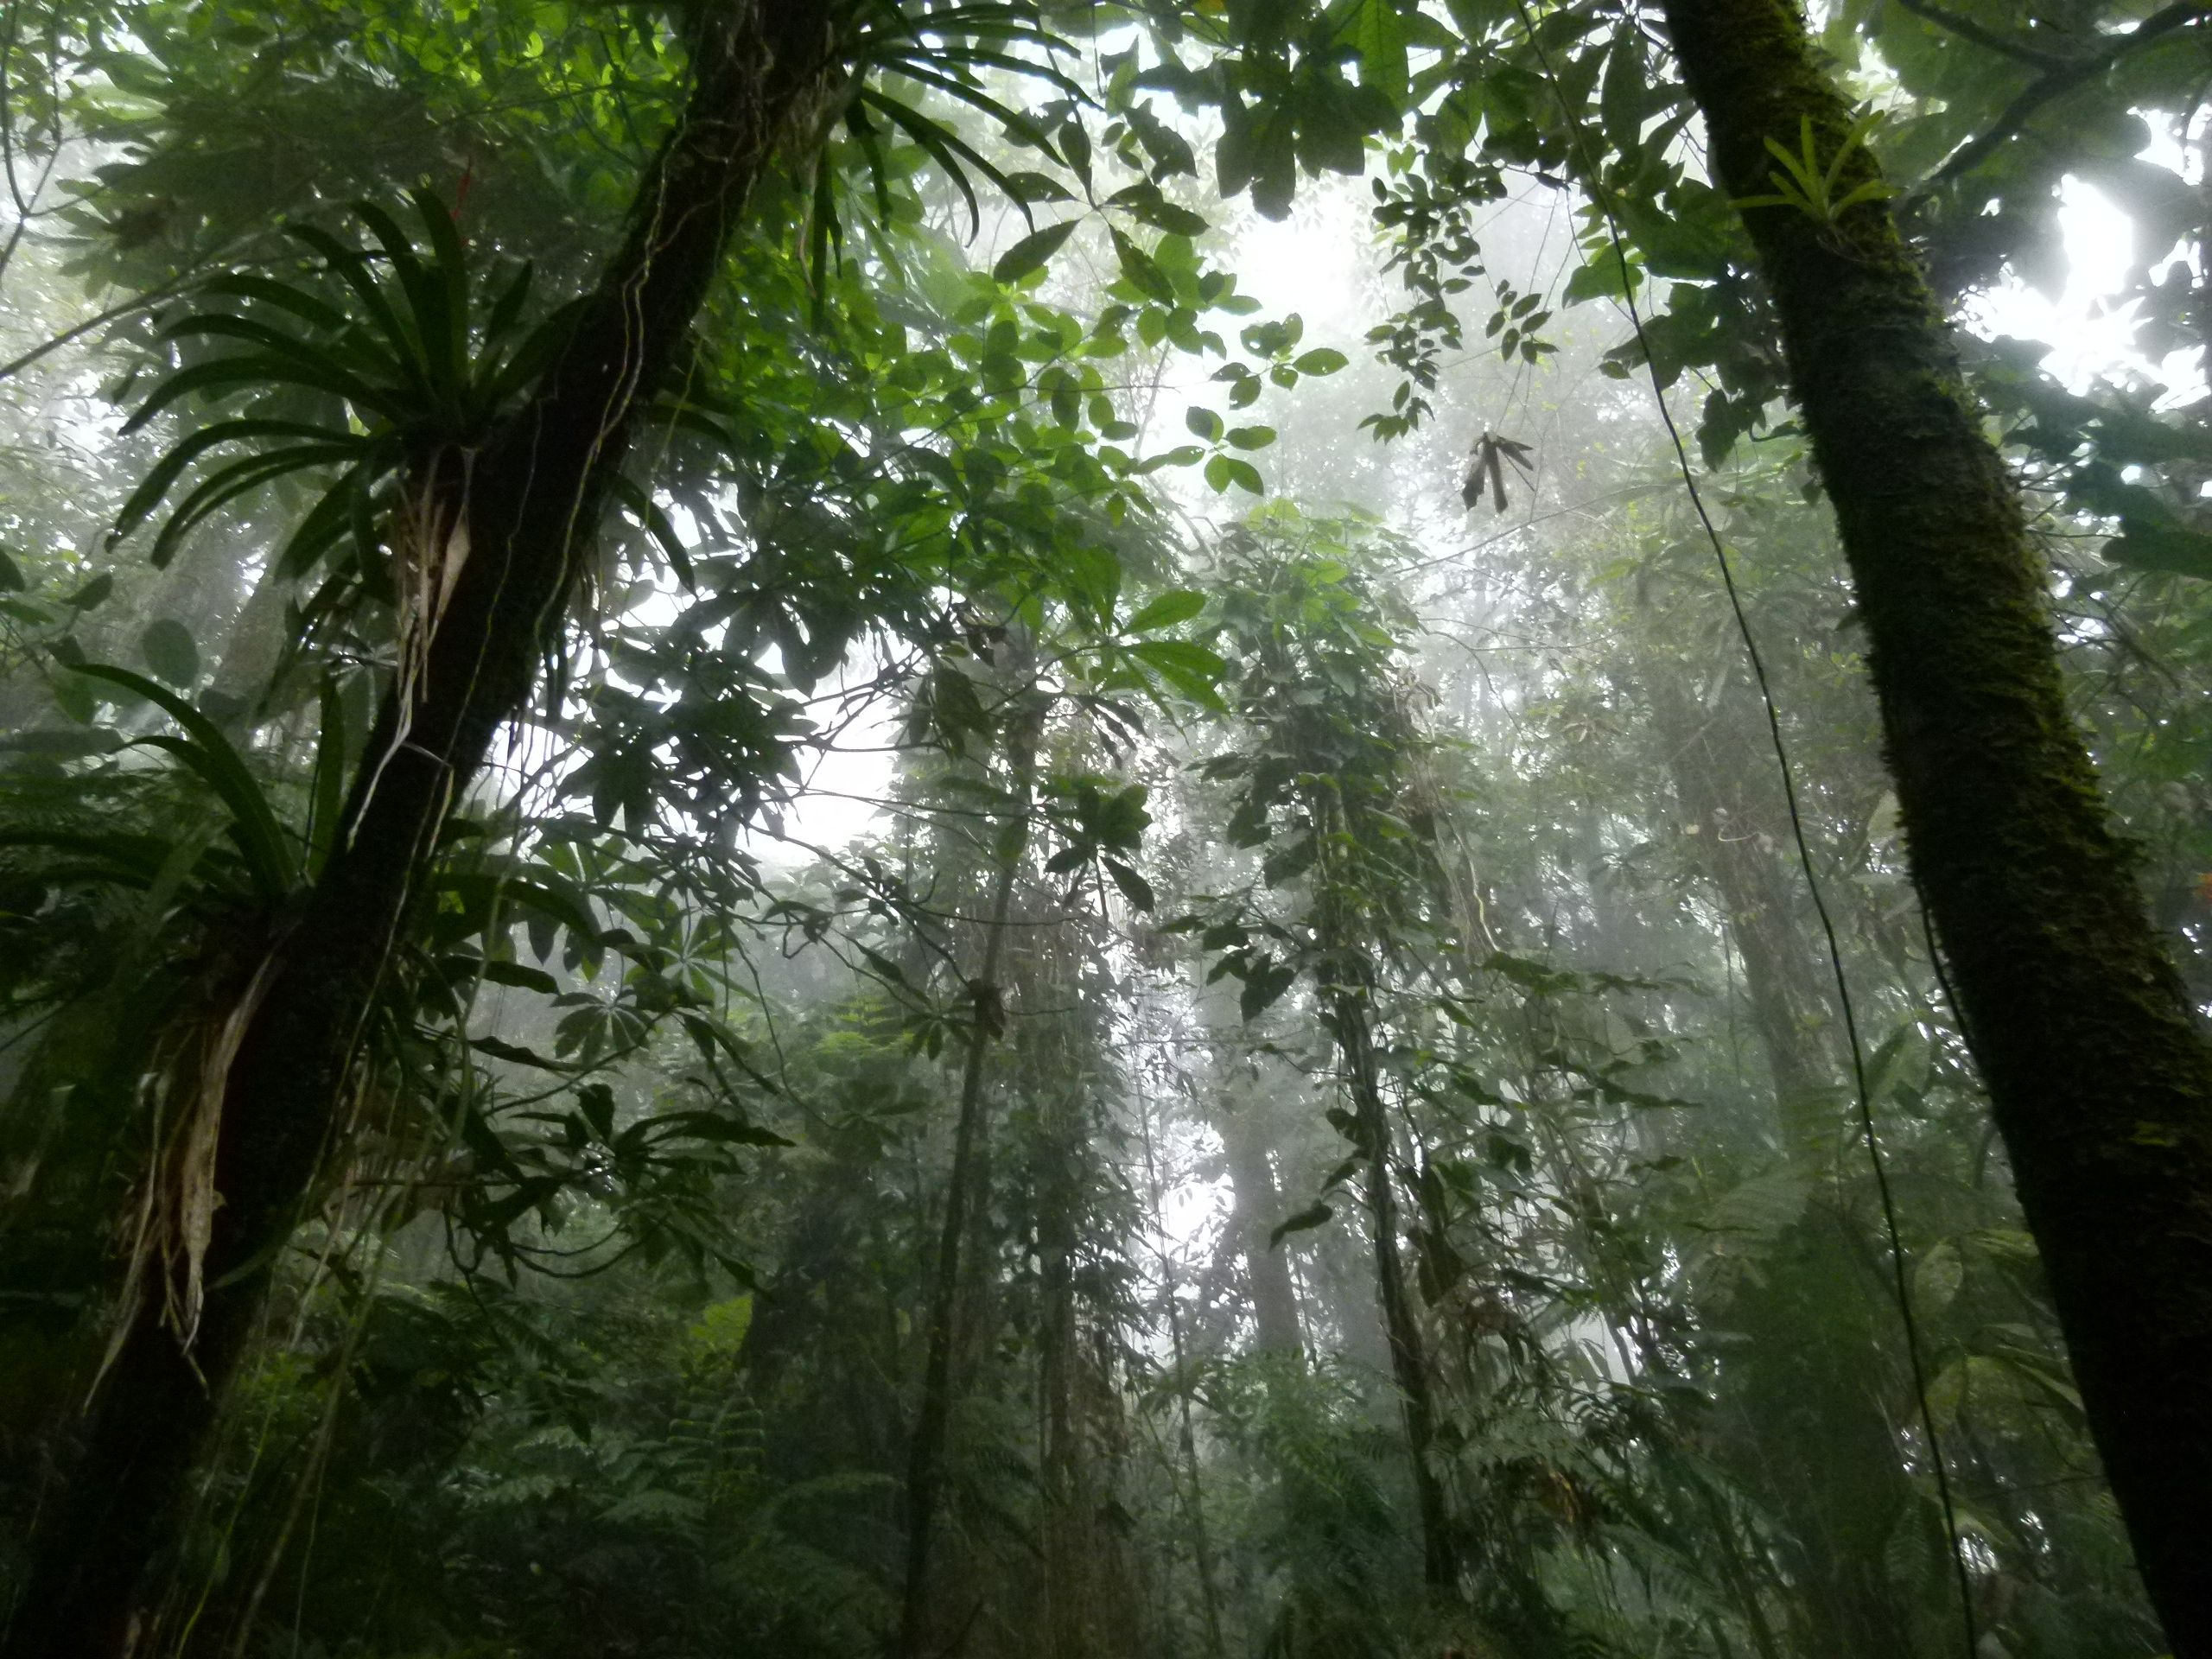 Dense rainforest